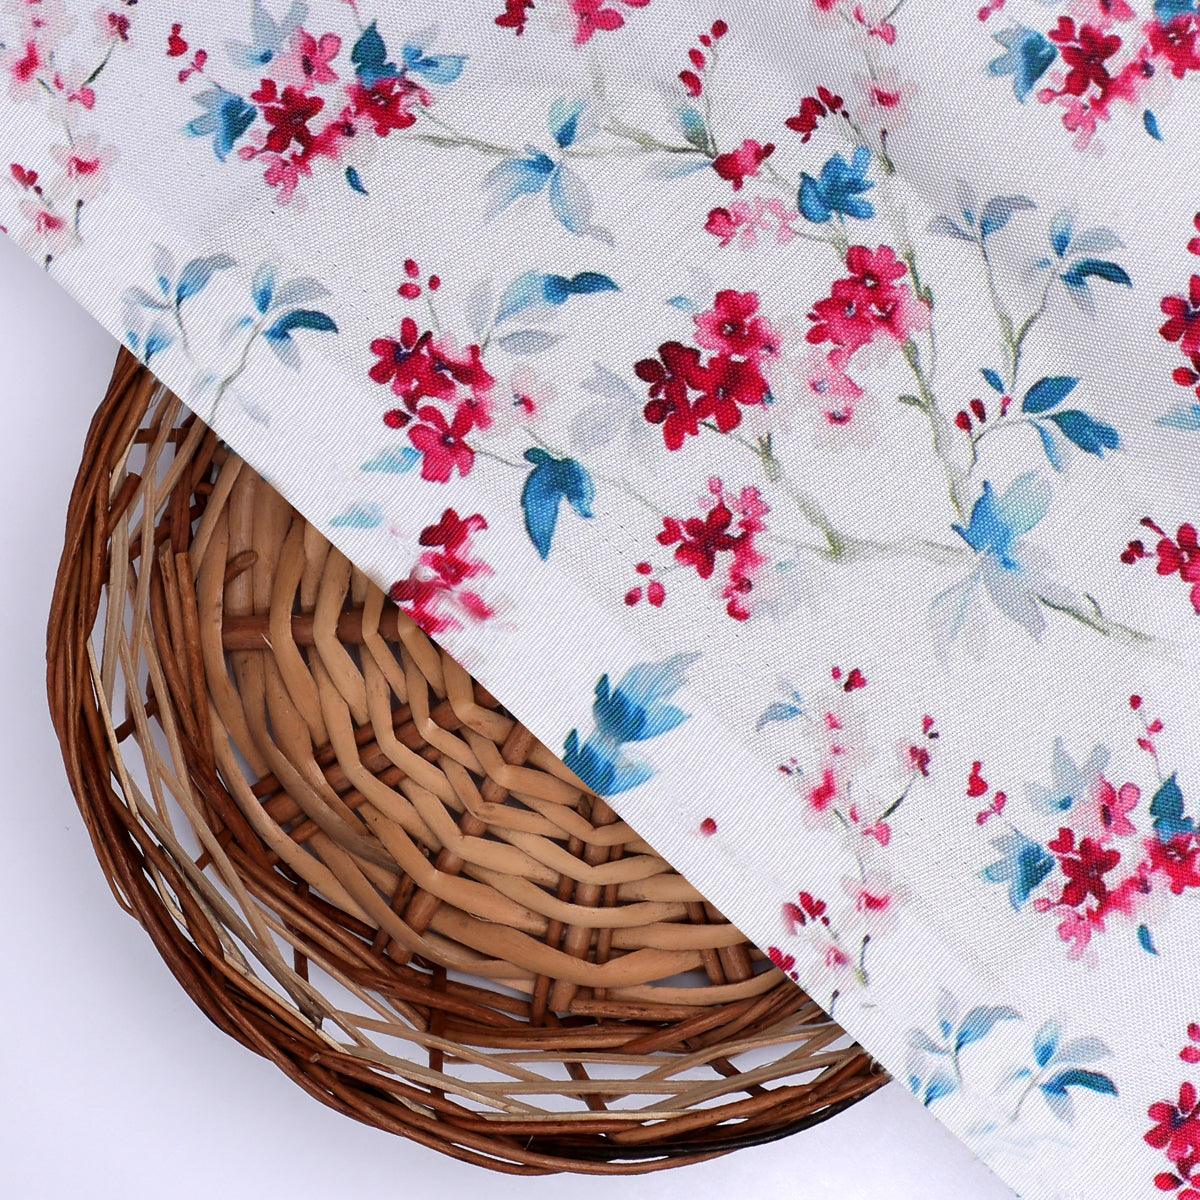 Beautiful Garden Iris Flower Digital Printed Fabric - Rayon - FAB VOGUE Studio®